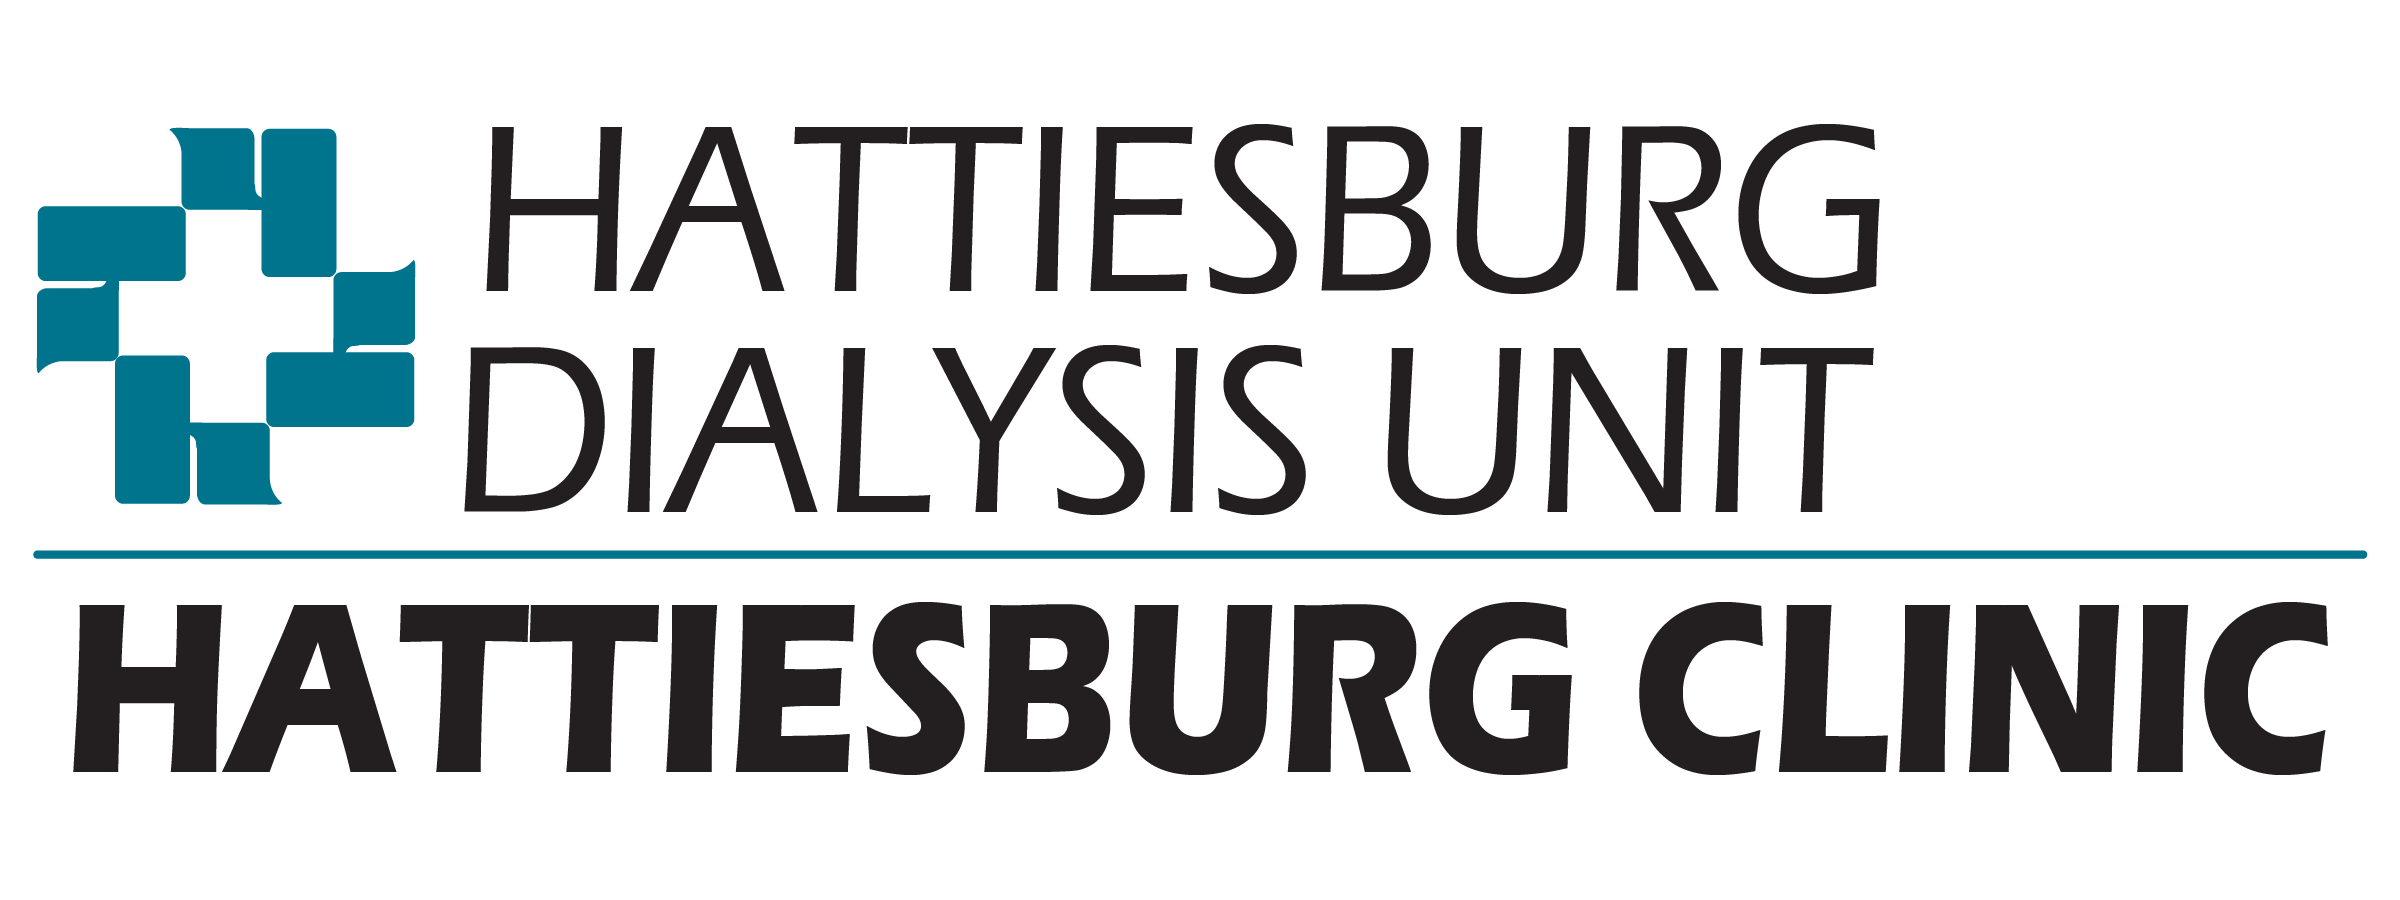 Hattiesburg Dialysis Unit logo